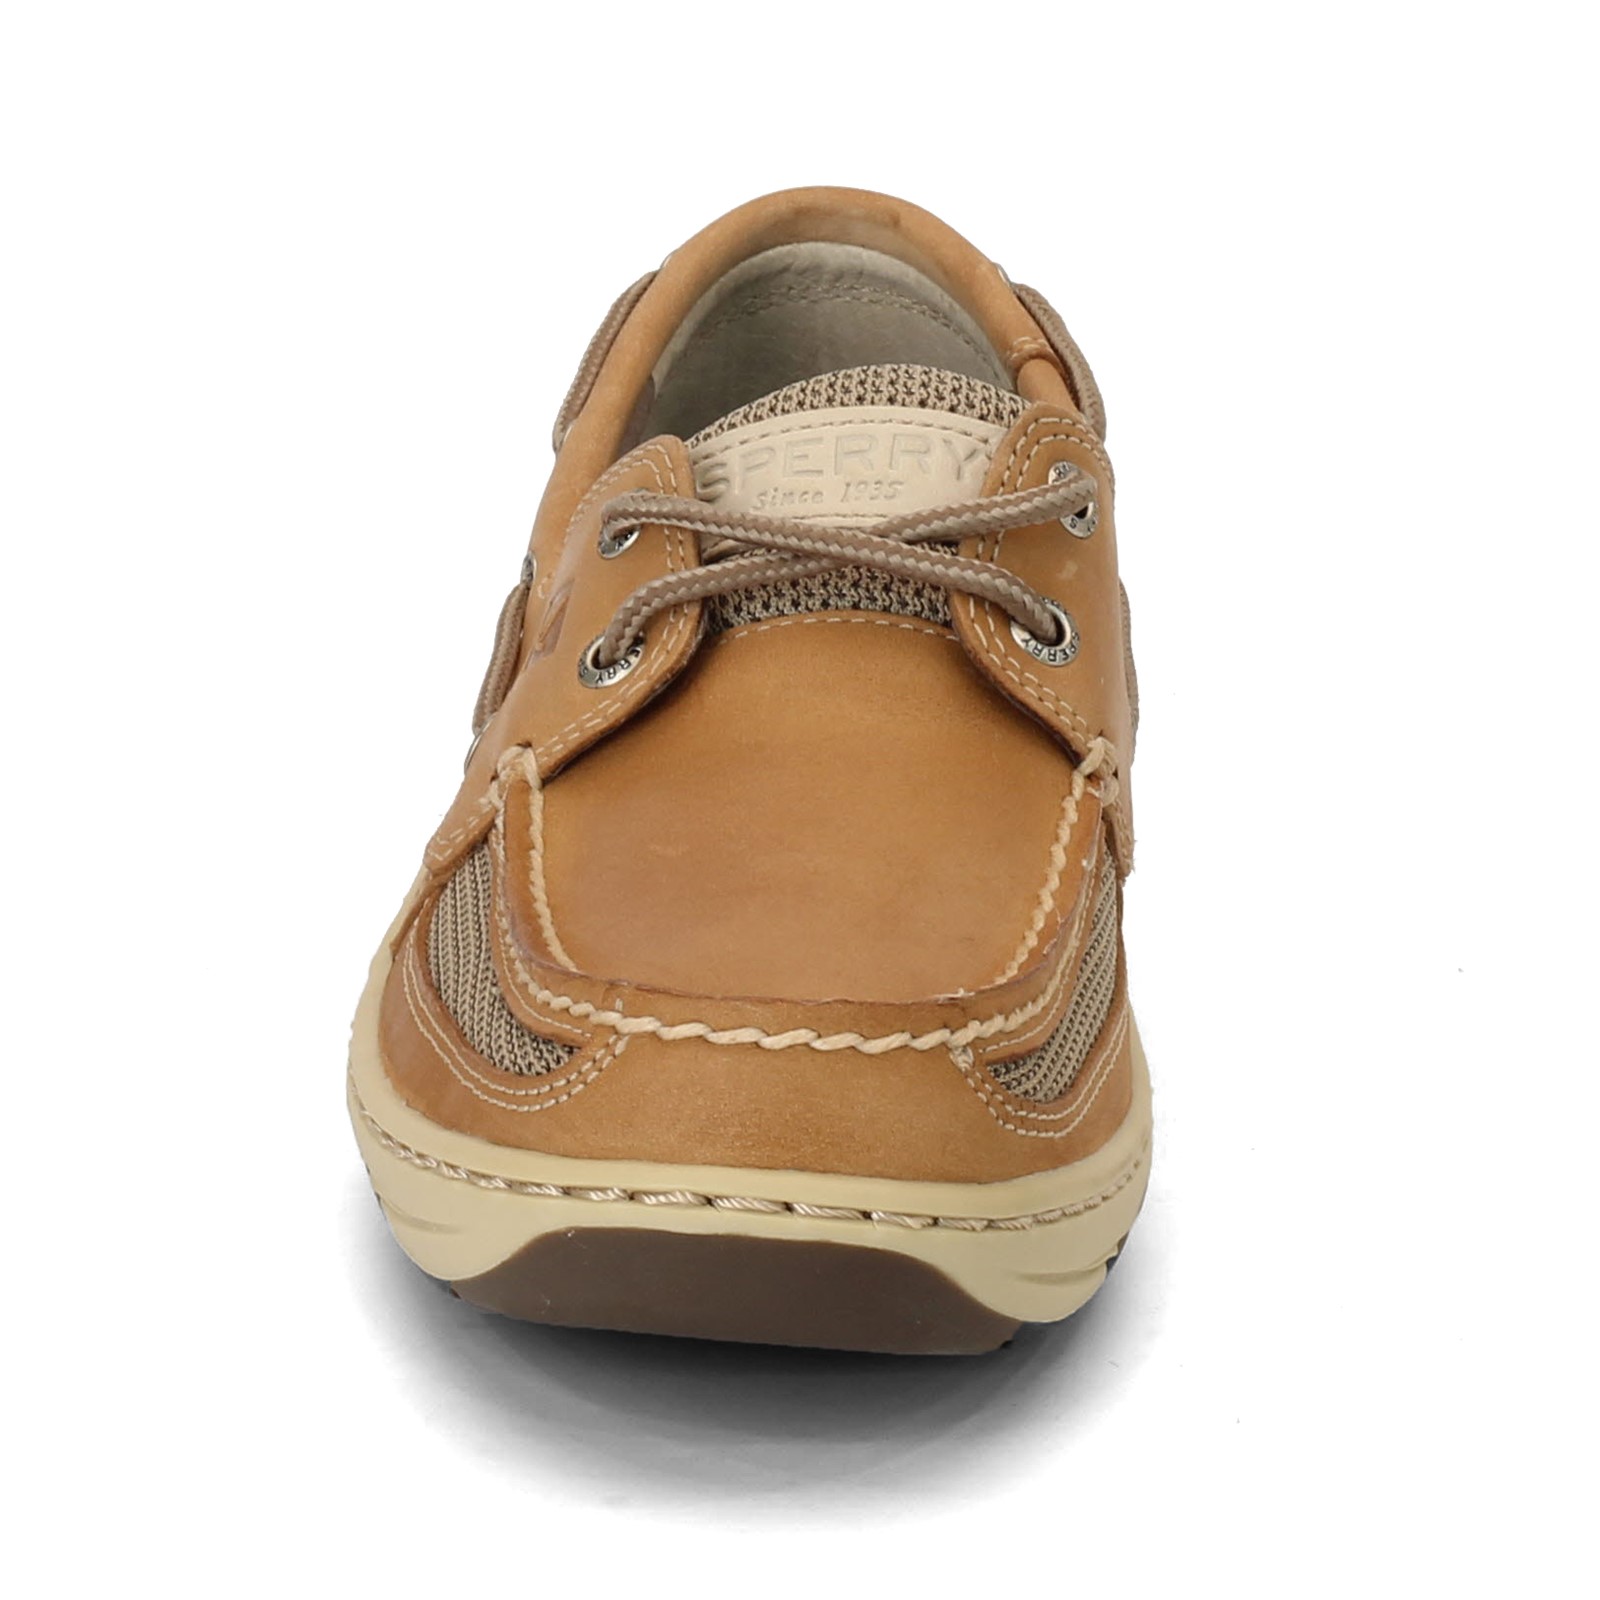 Men's Sperry, Tarpon 2-Eye Boat Shoes - image 2 of 6